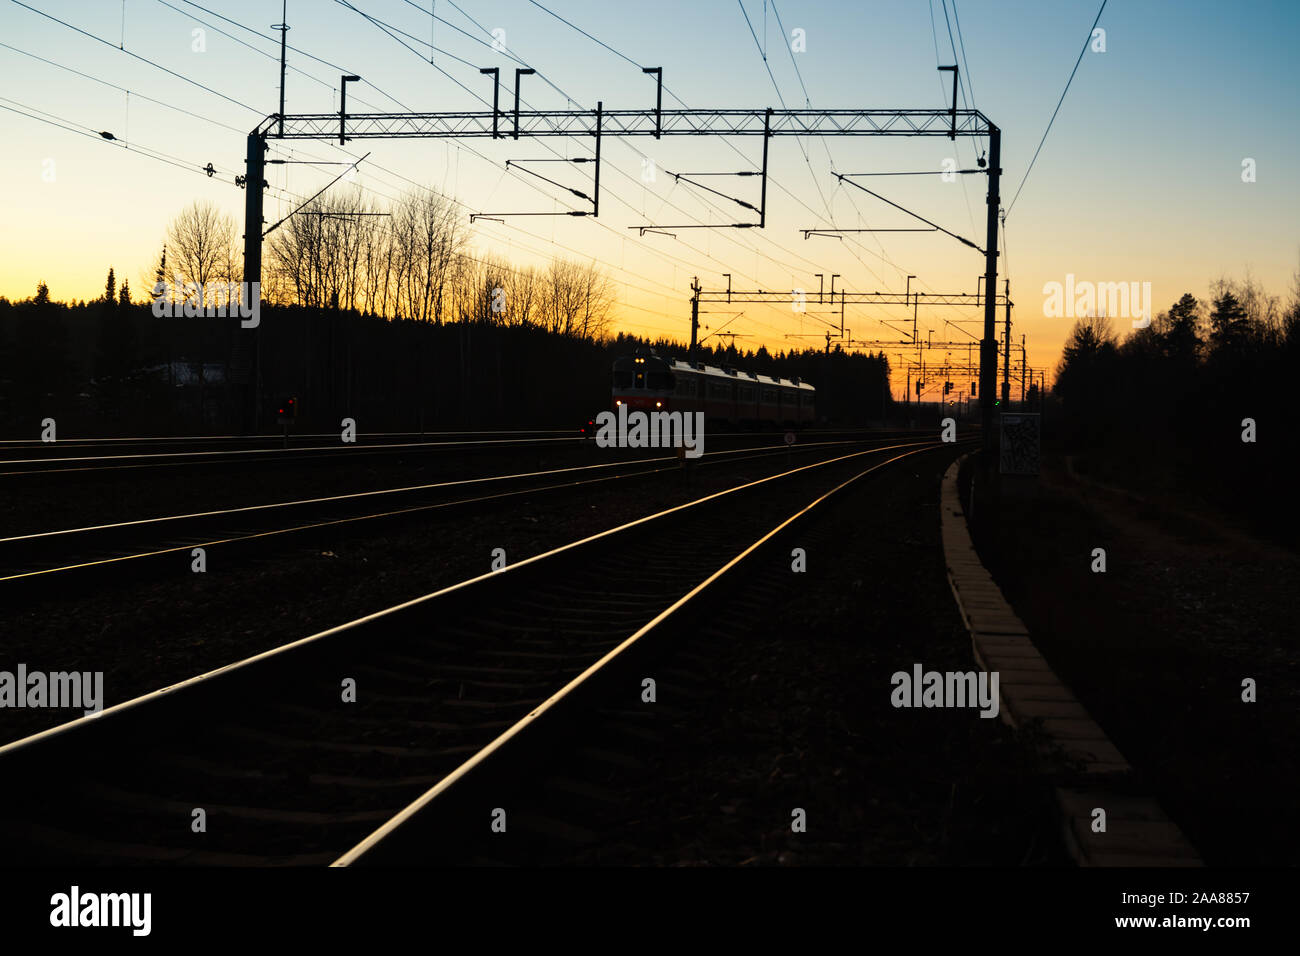 Kouvola, Finland - 15 November 2019: Train and railway at beautiful sunset background. Stock Photo